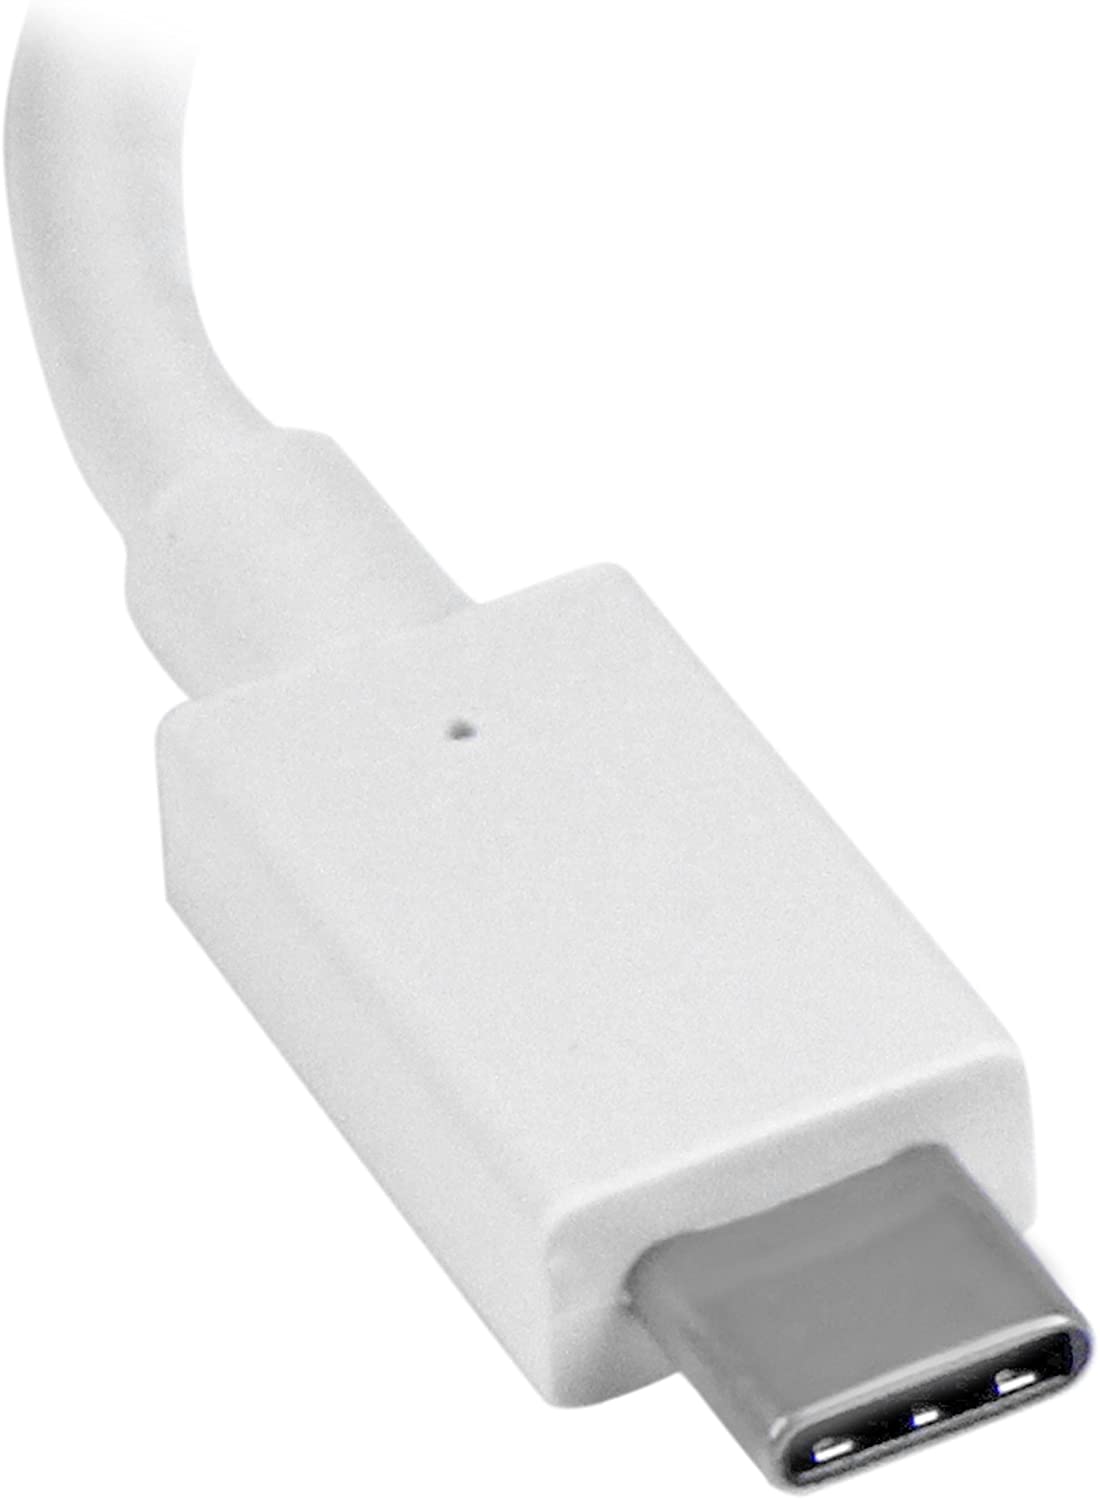 StarTech.com USB C to HDMI Adapter - 4K 30Hz - USB 3.1 Type-C to HDMI Adapter - USB-C to HDMI Dongle - Monitor Adapter - White (CDP2HDW) White 4K 30Hz